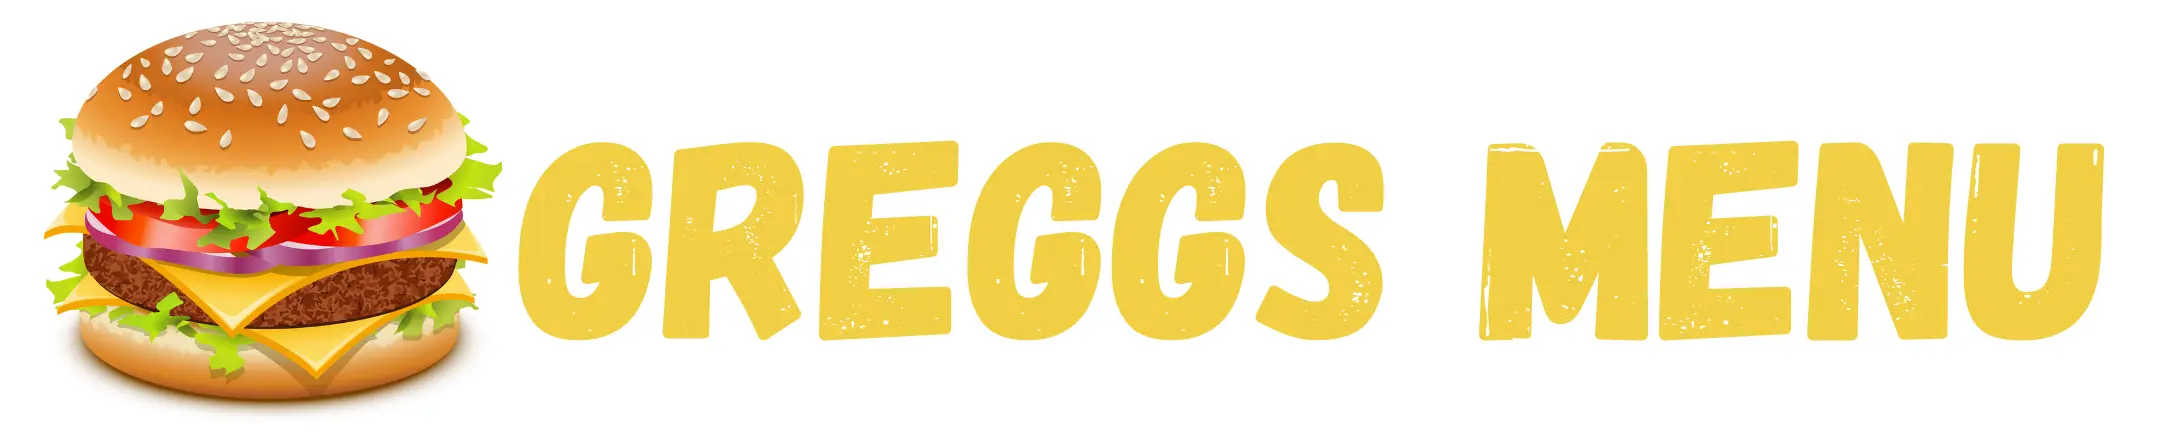 Greggs Menu Logo